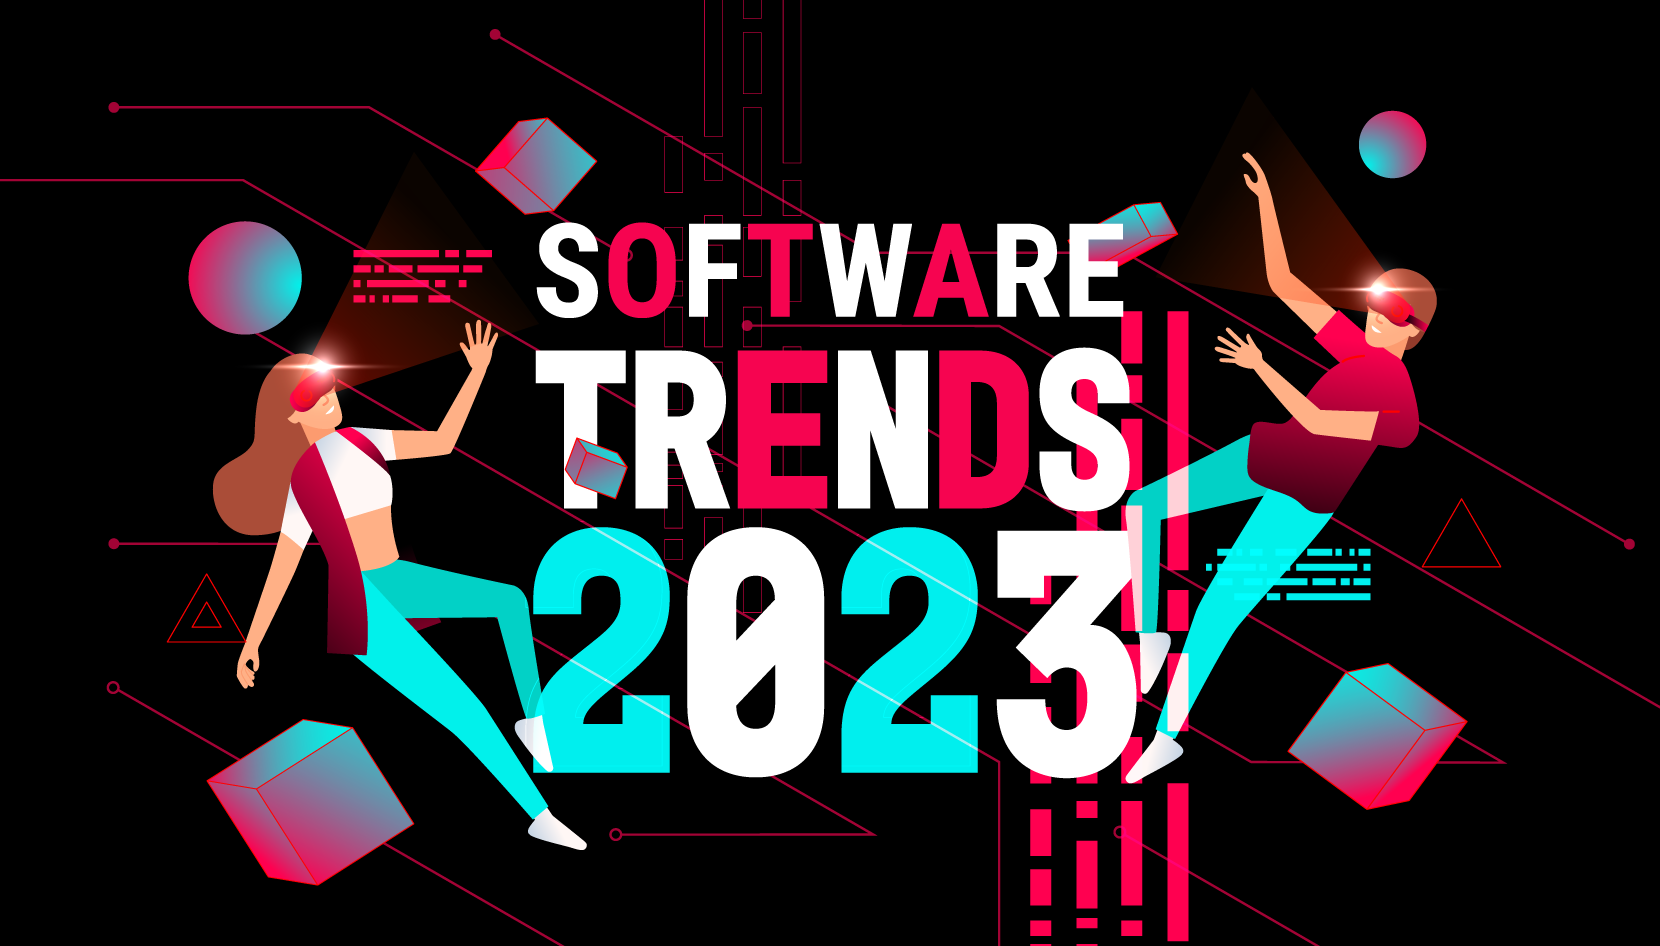 software-trends 2023